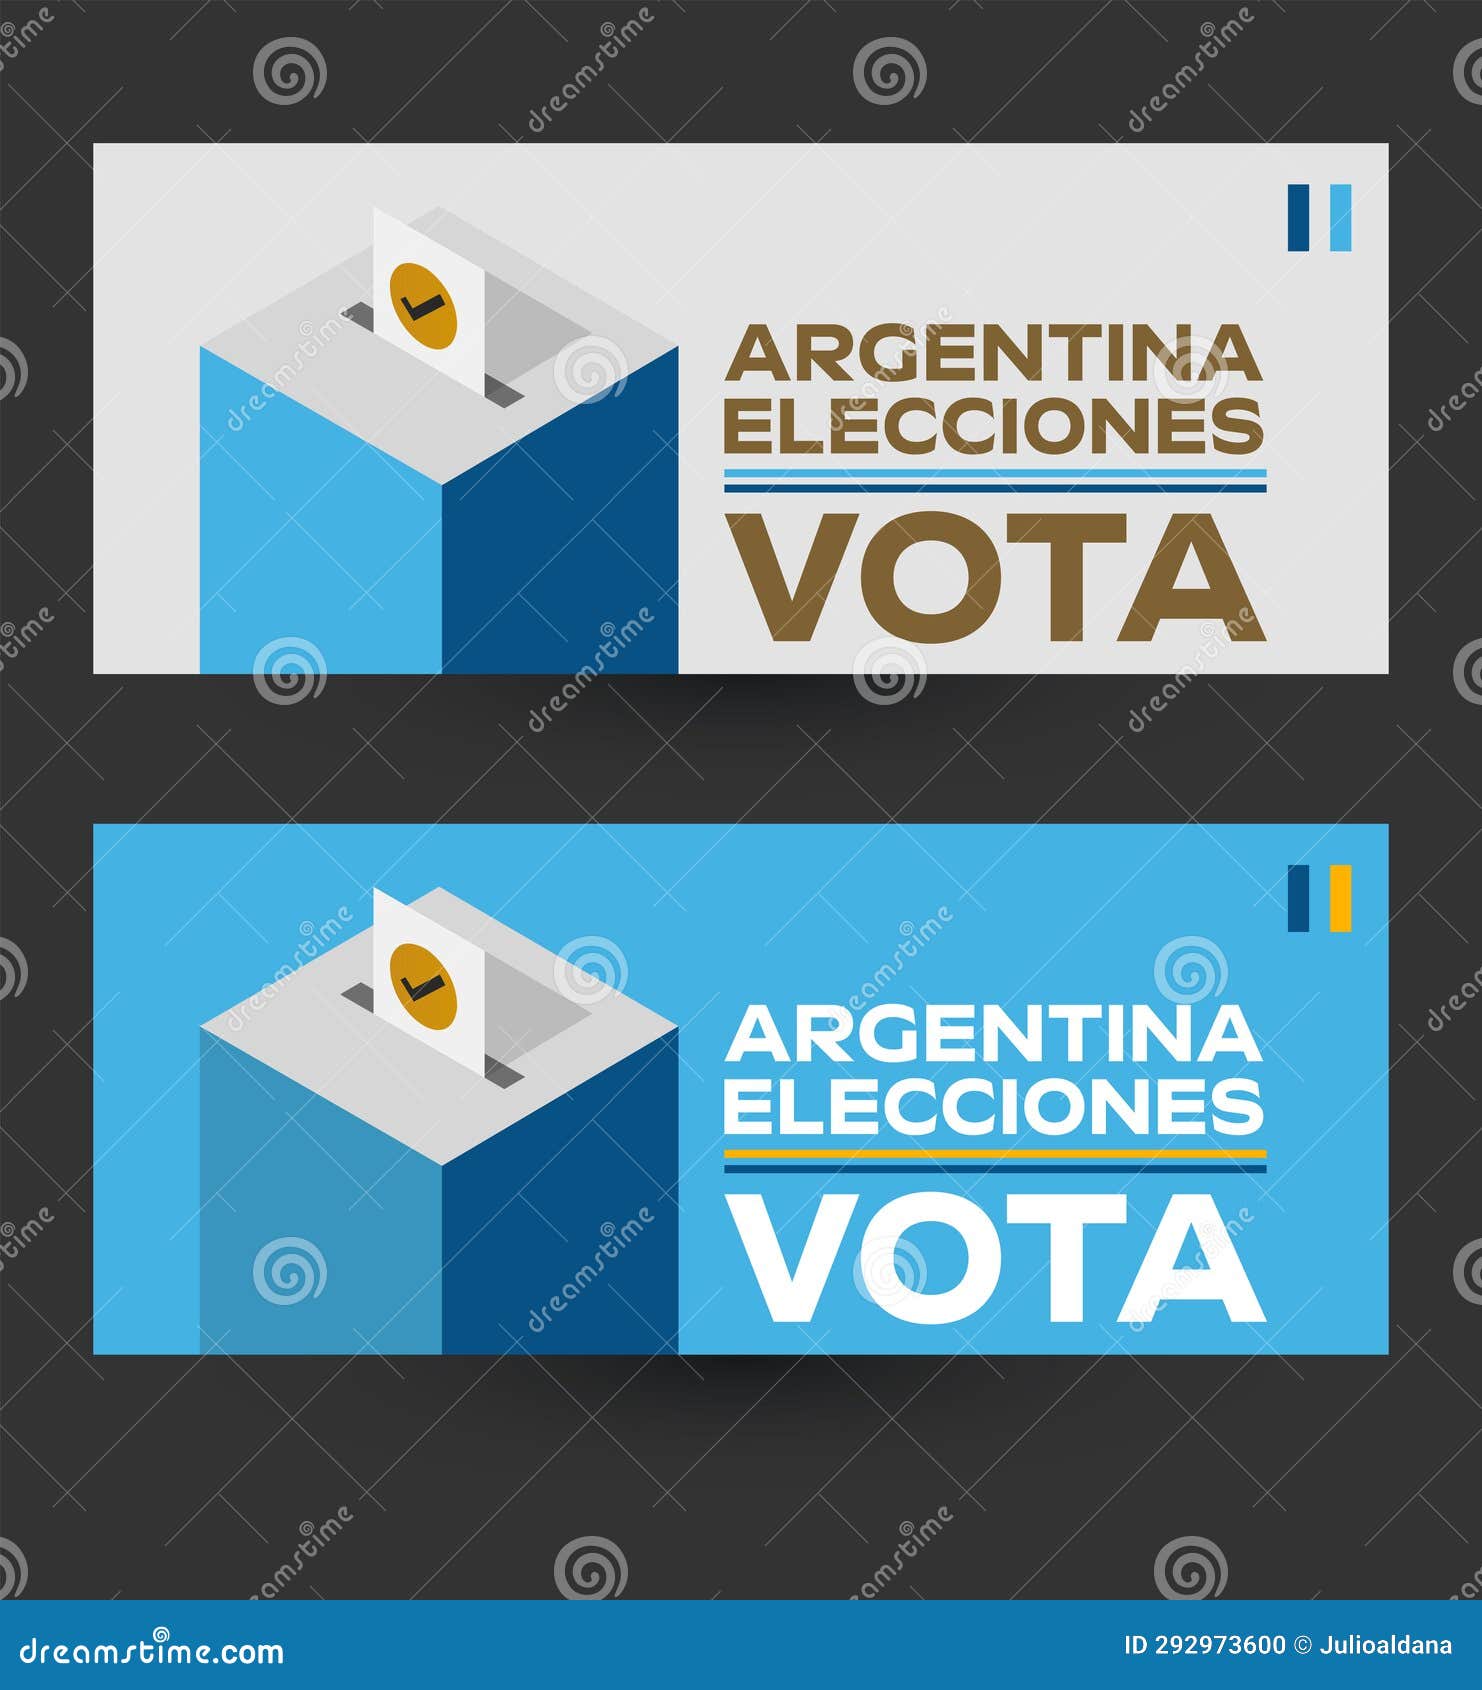 vota argentina elecciones, vote argentinian elections spanish text .